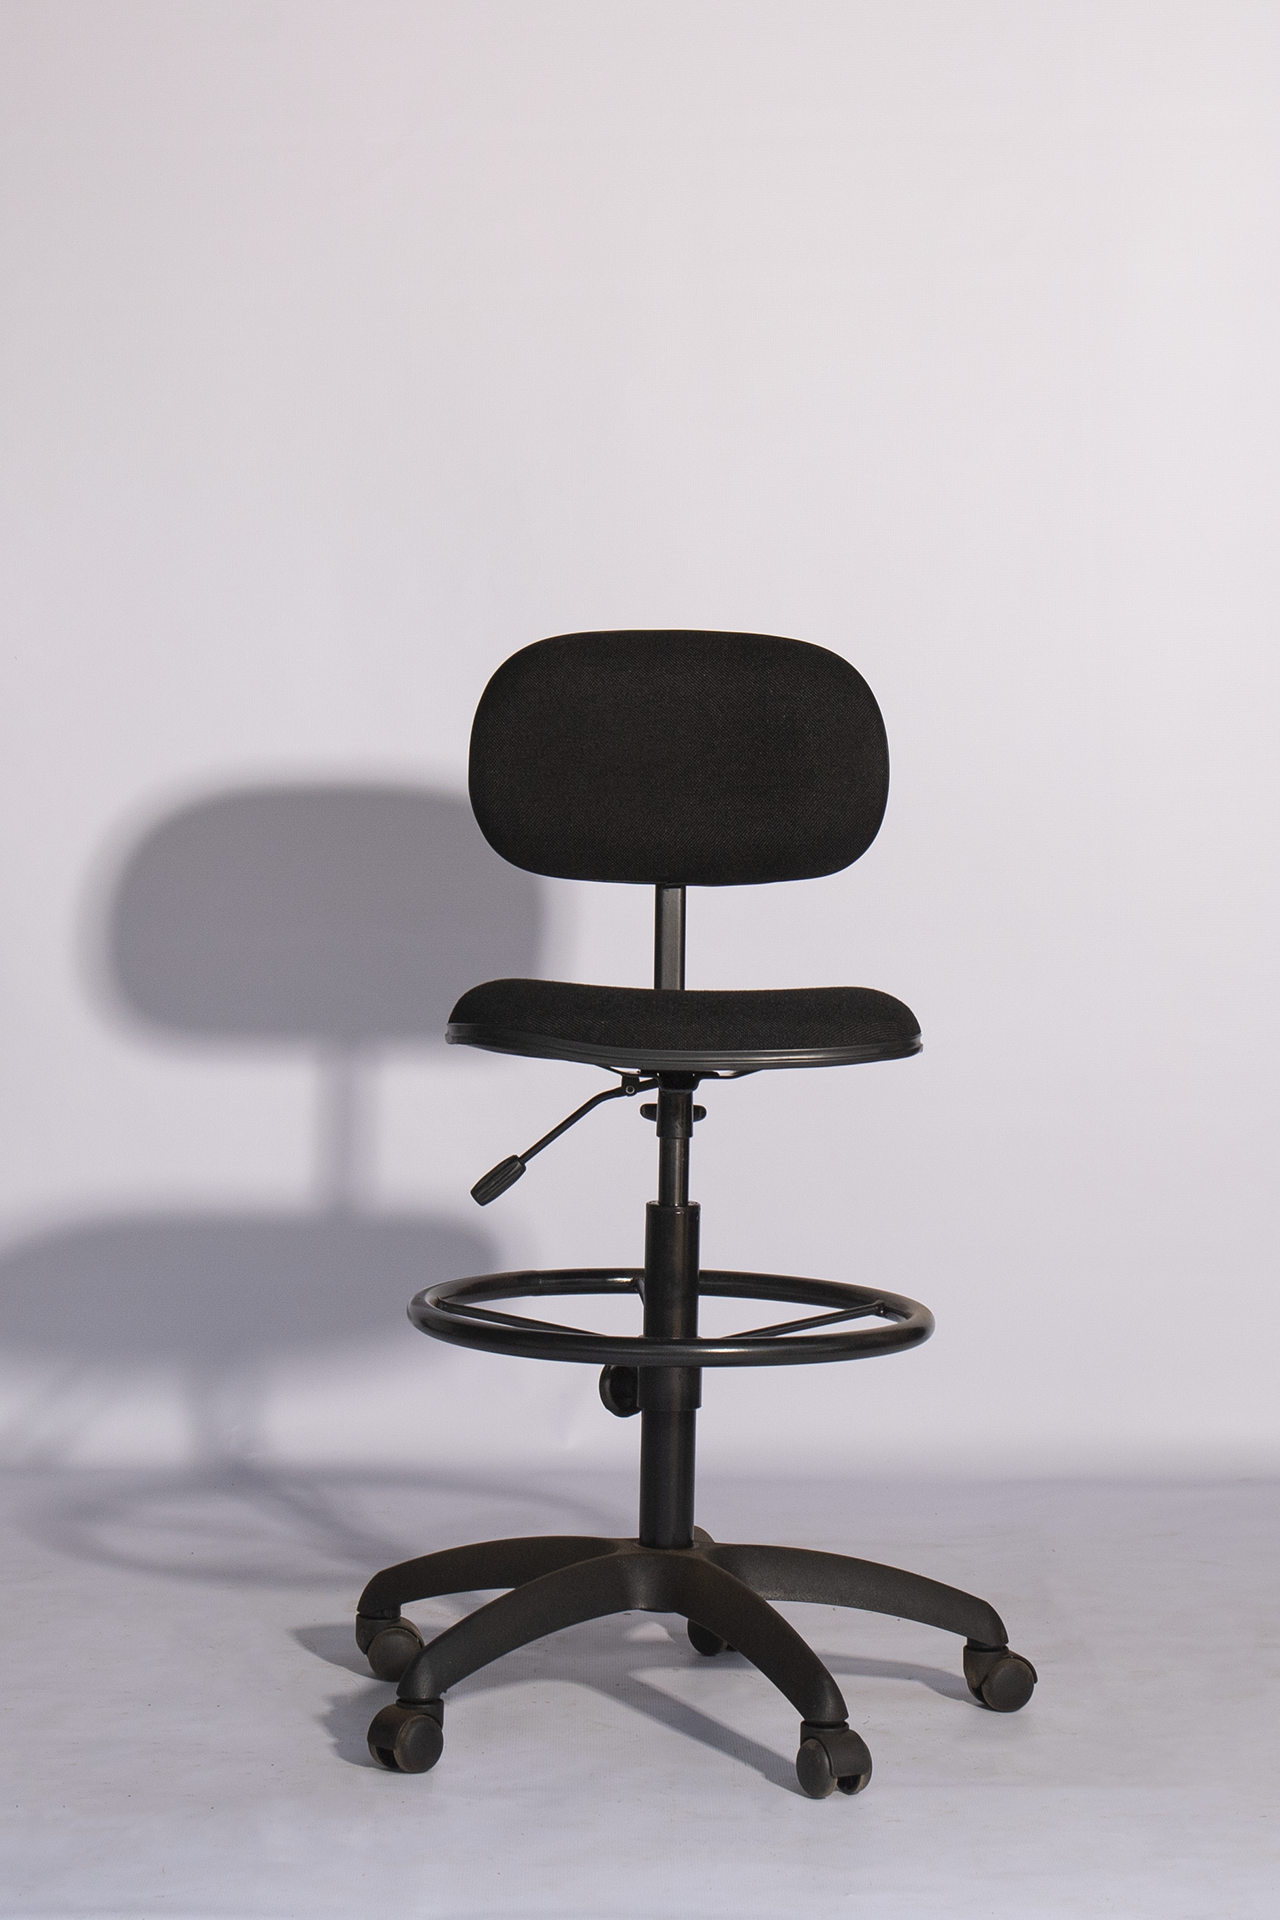 Draughtsman Chair - Material